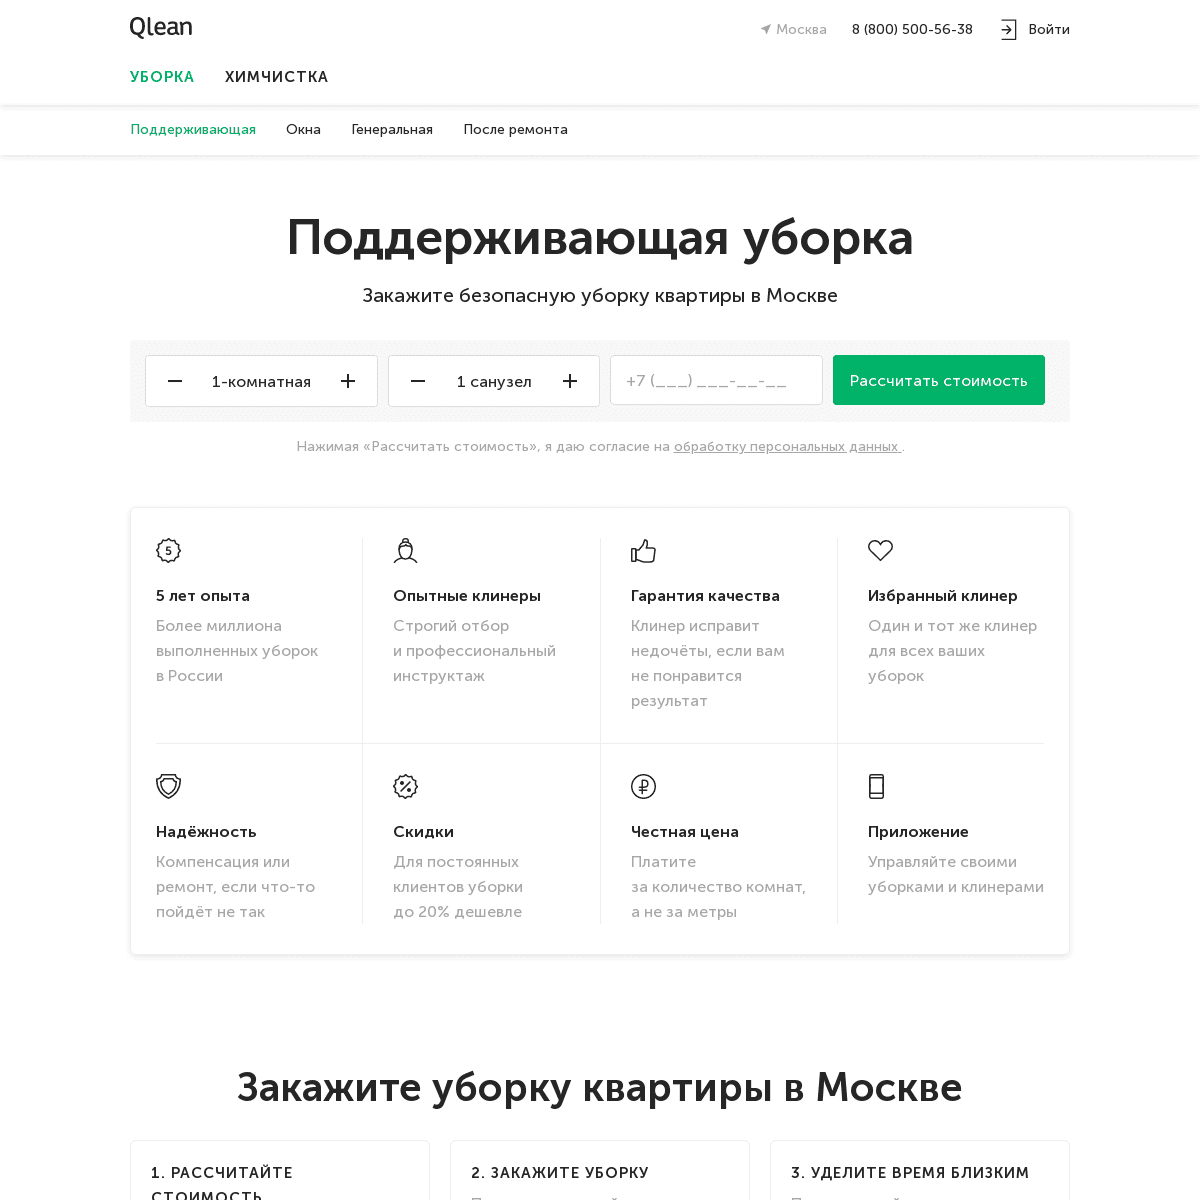 A complete backup of https://qlean.ru